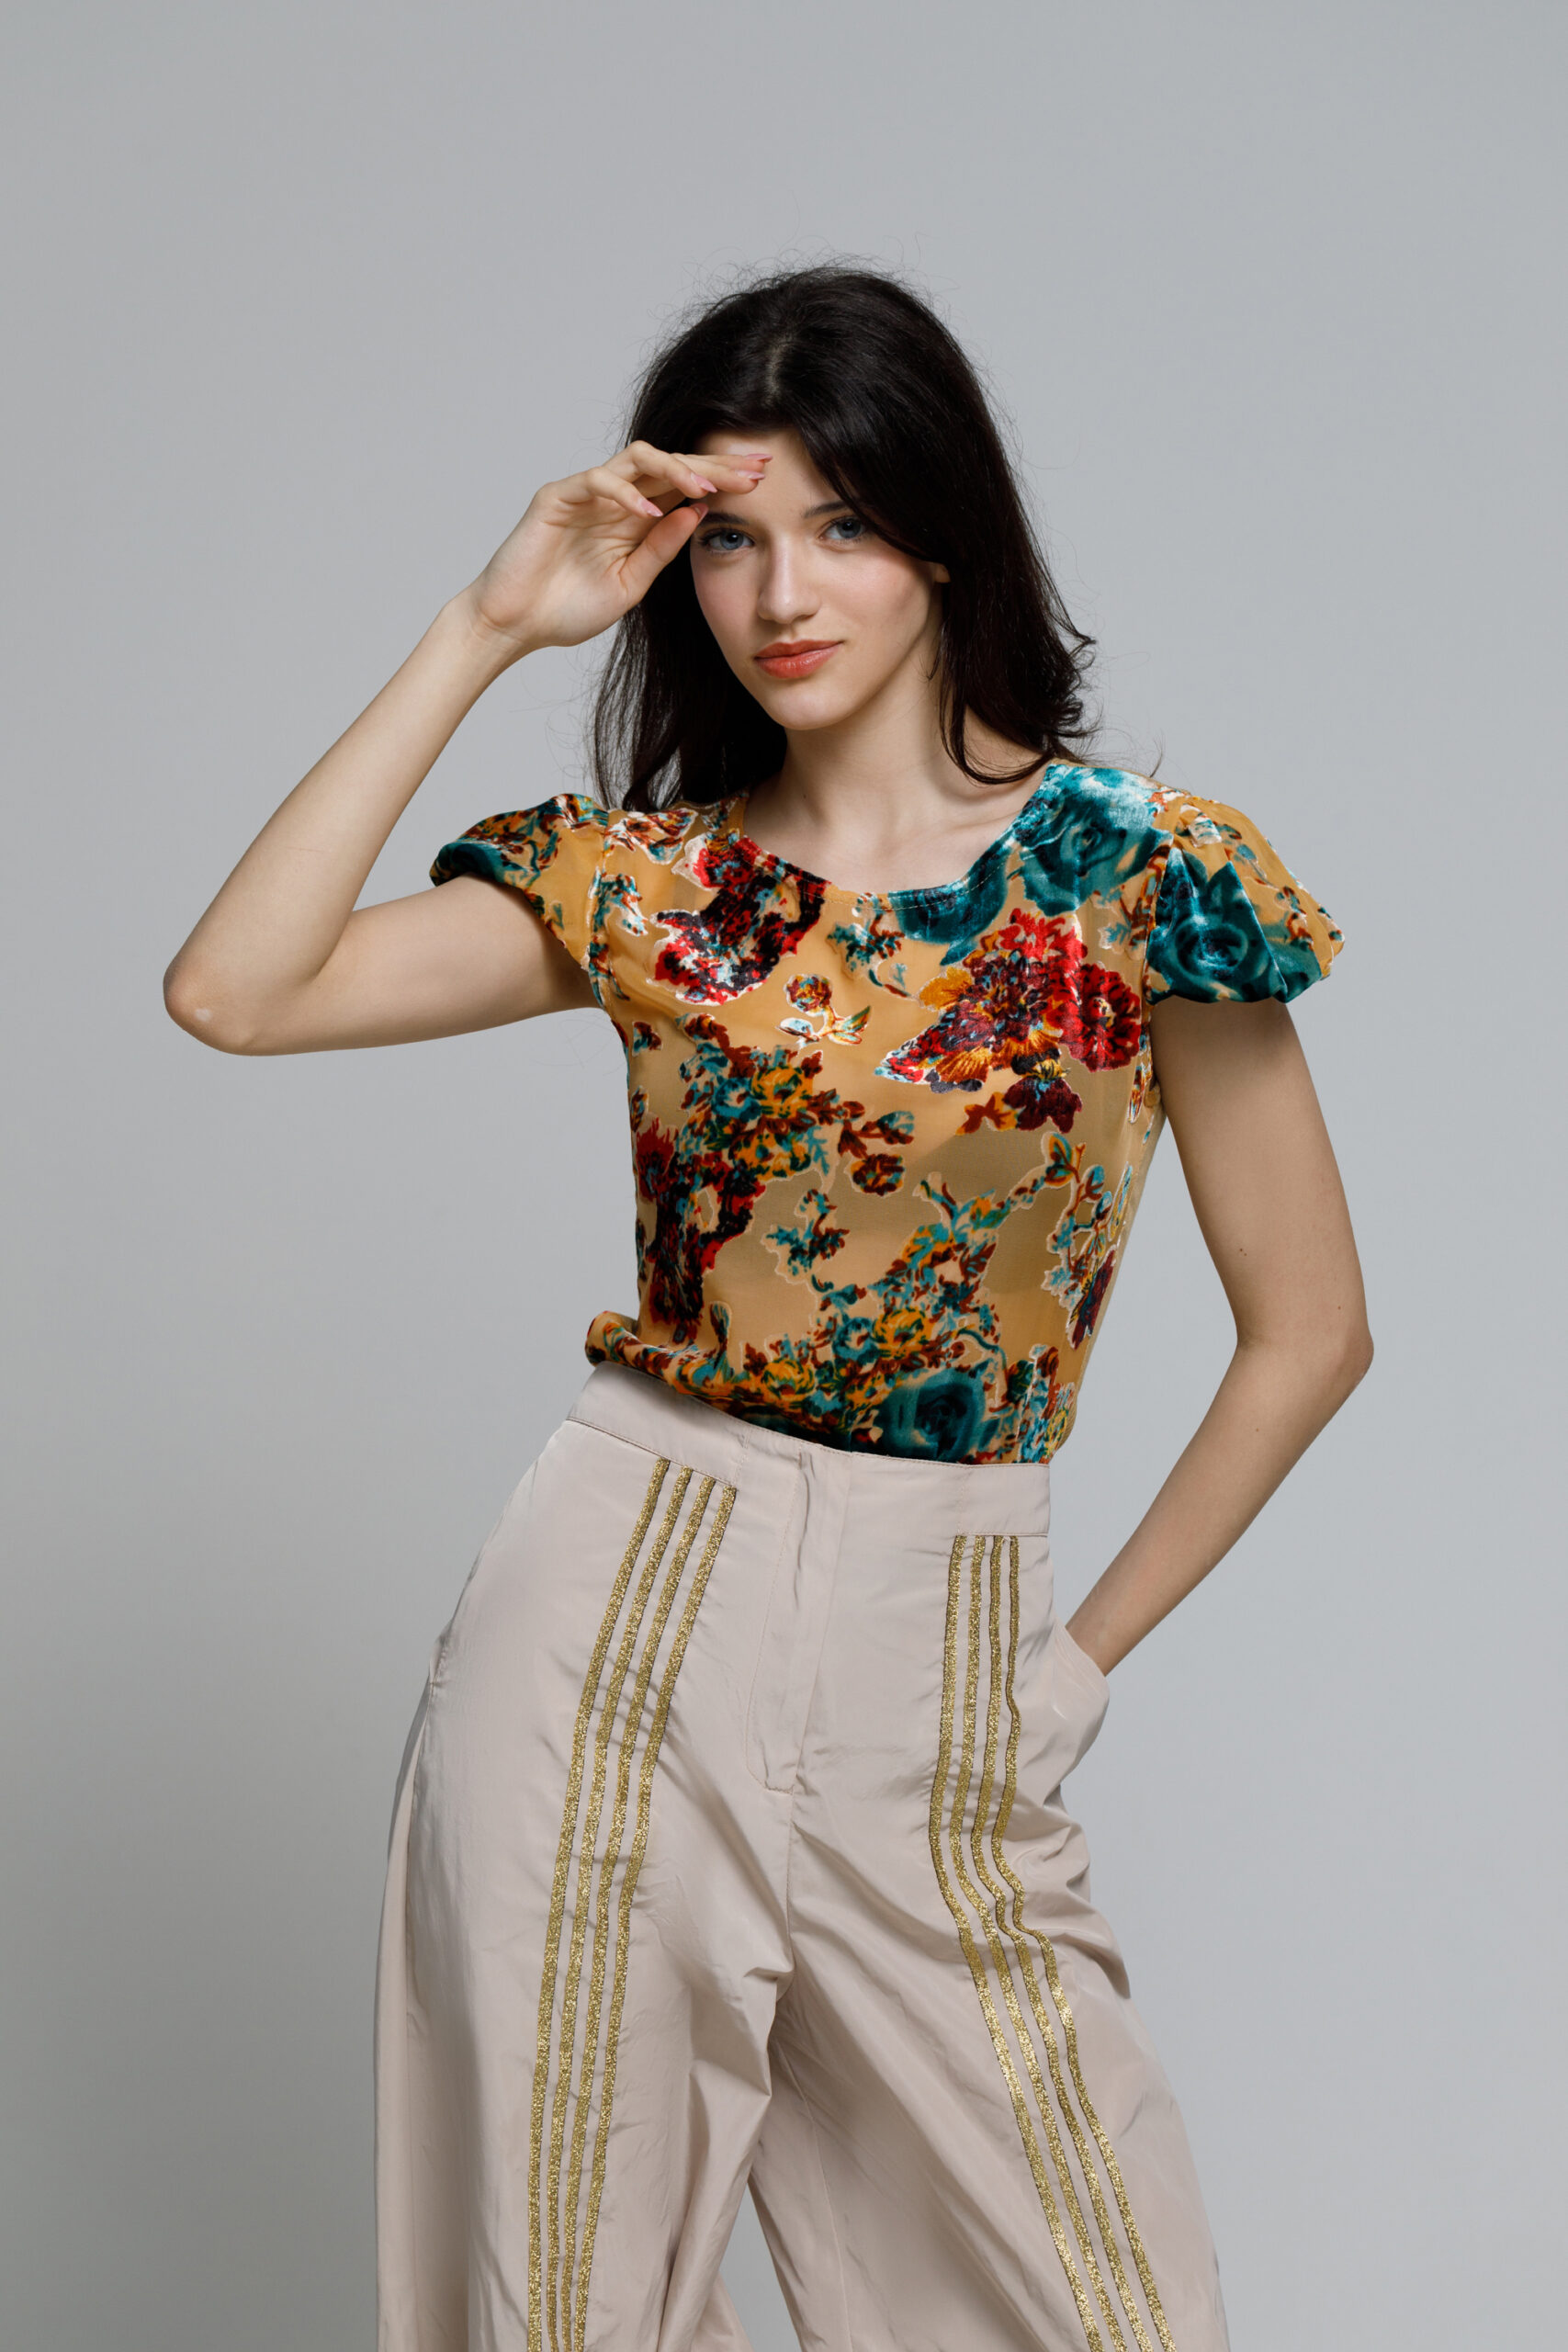 BELY2 blouse with velvet floral motifs. Natural fabrics, original design, handmade embroidery